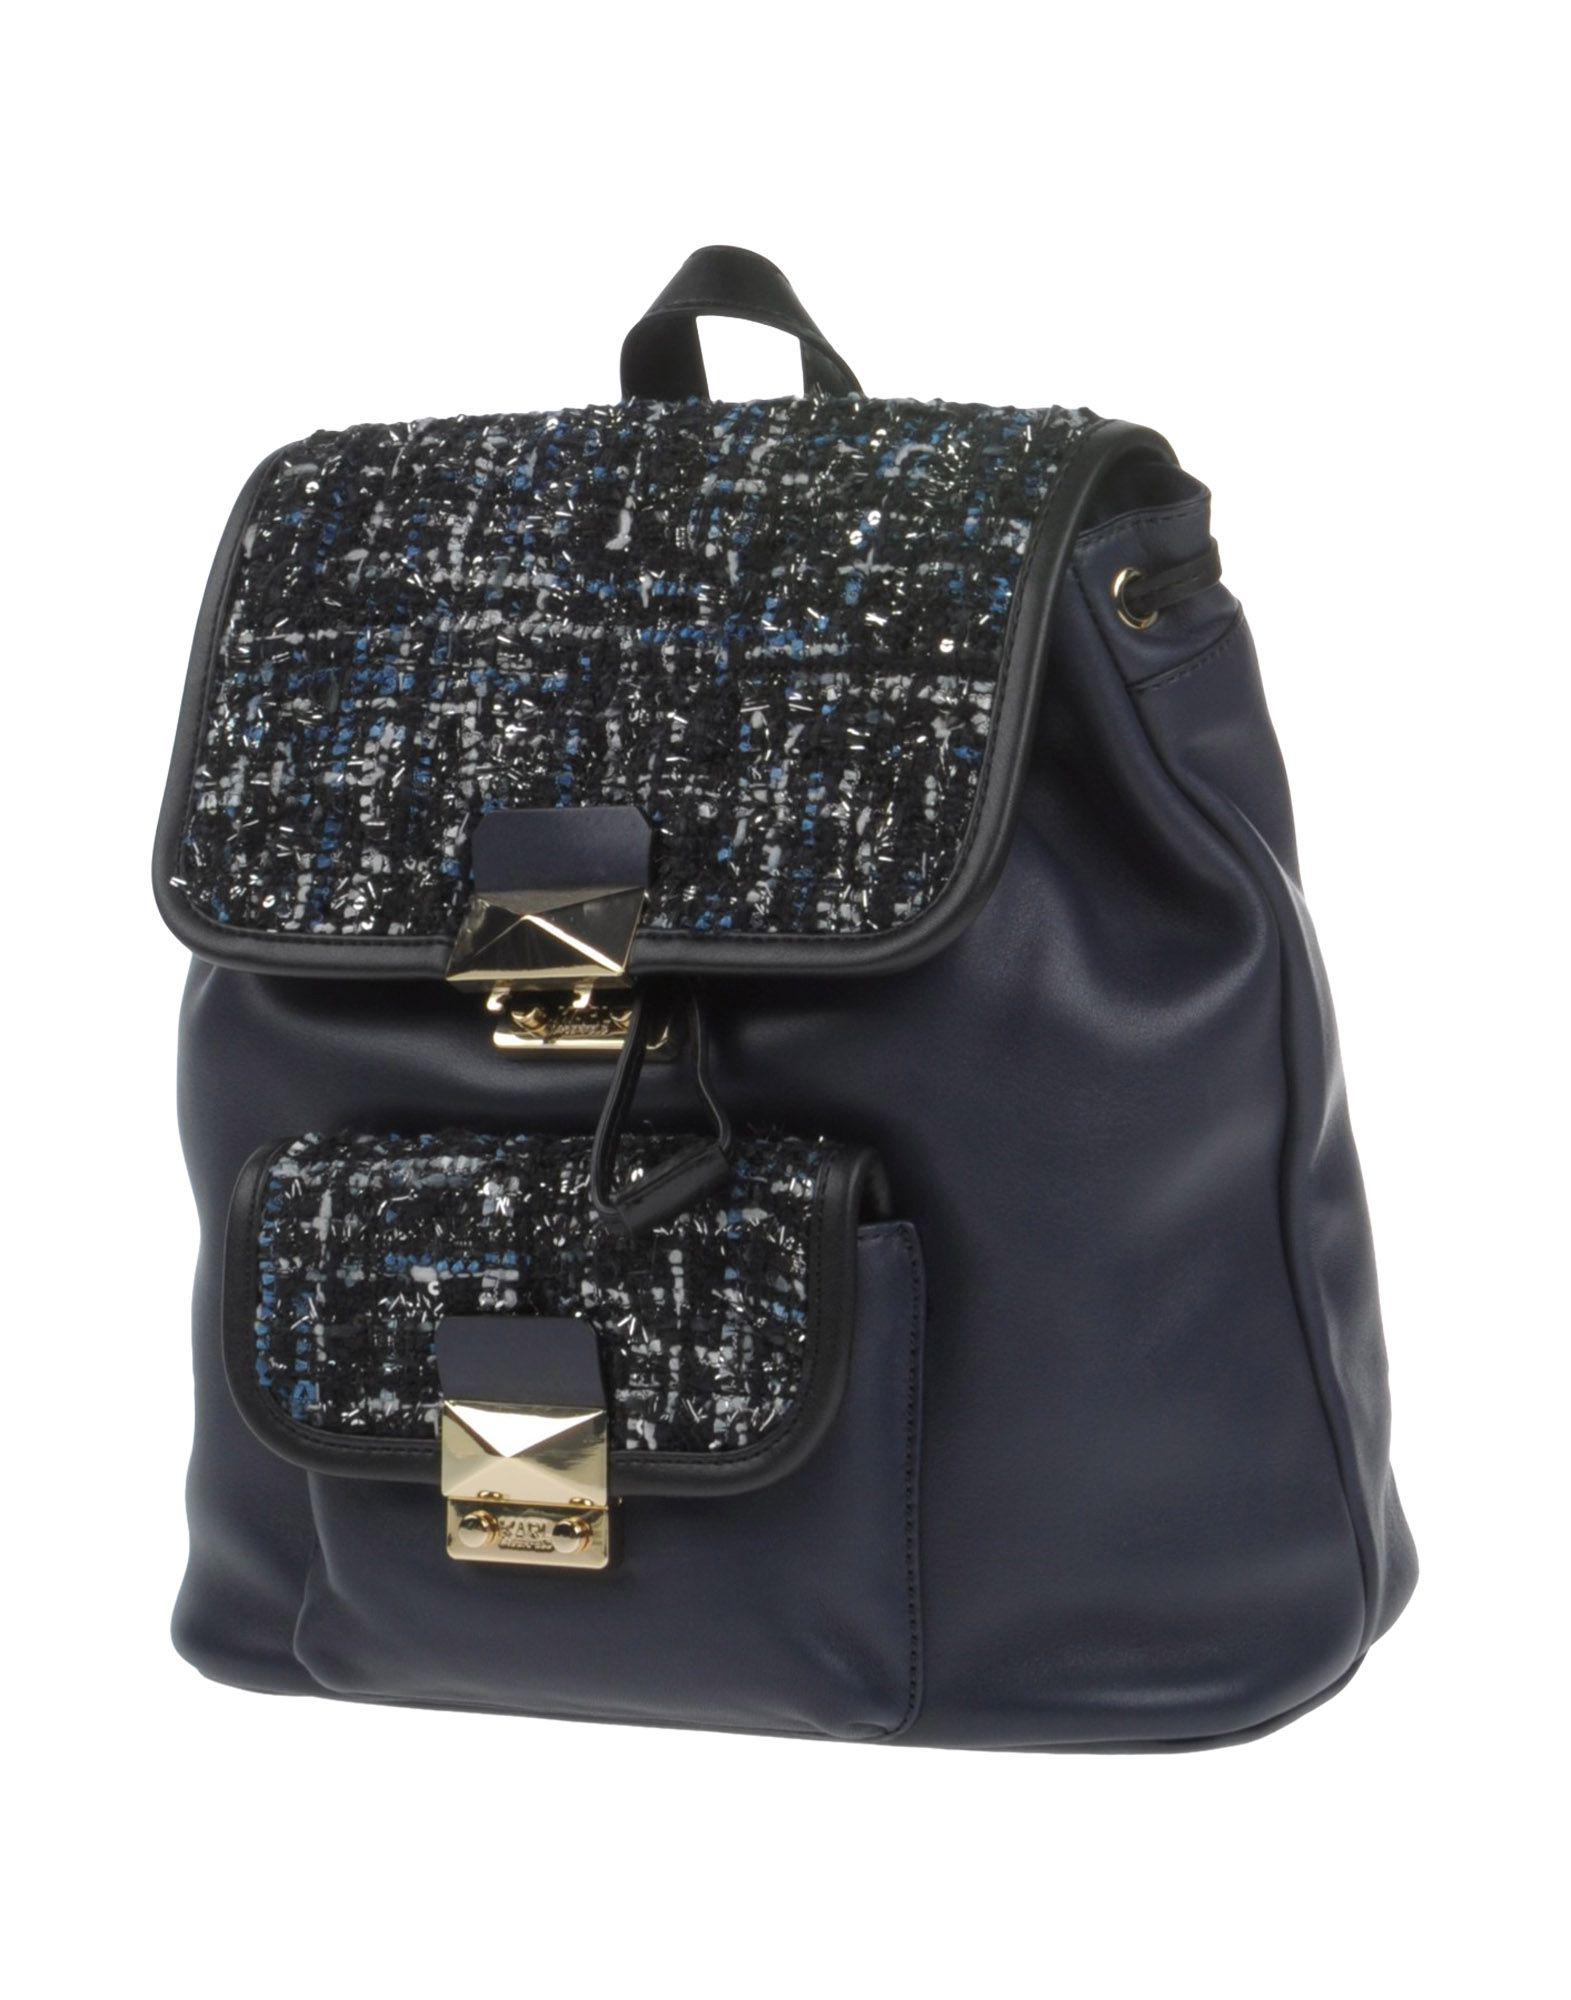 Karl Lagerfeld Leather Backpacks & Fanny Packs in Dark Blue (Blue) - Lyst